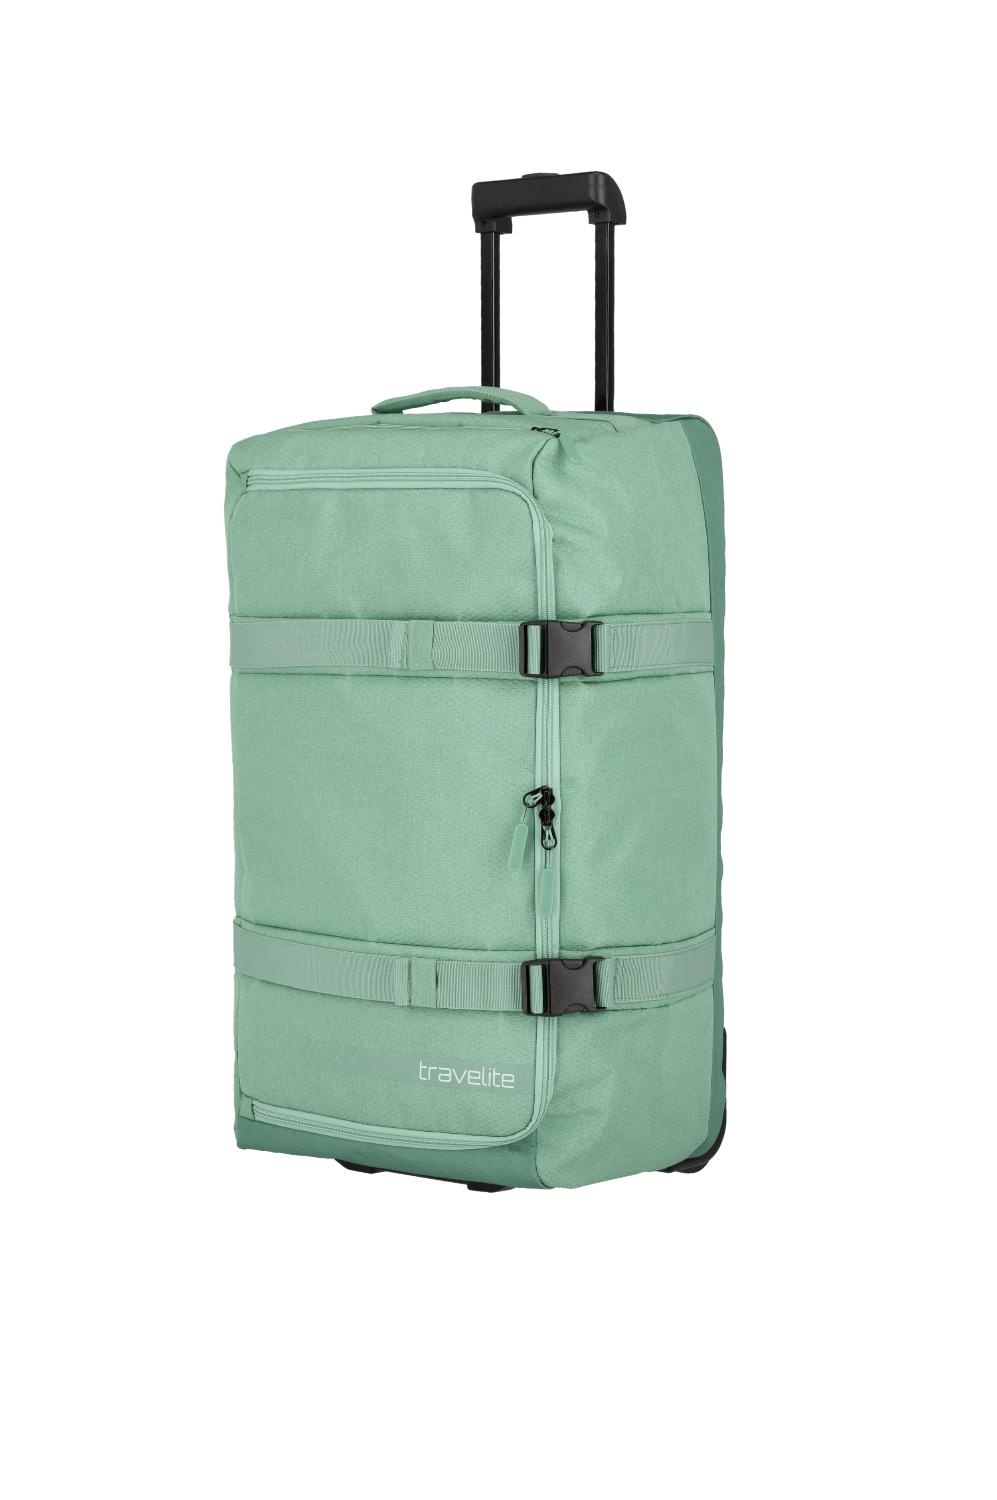 Travelite Reistas / Weekendtas / Handbagage - Kick Off - 37 cm (small) - Groen